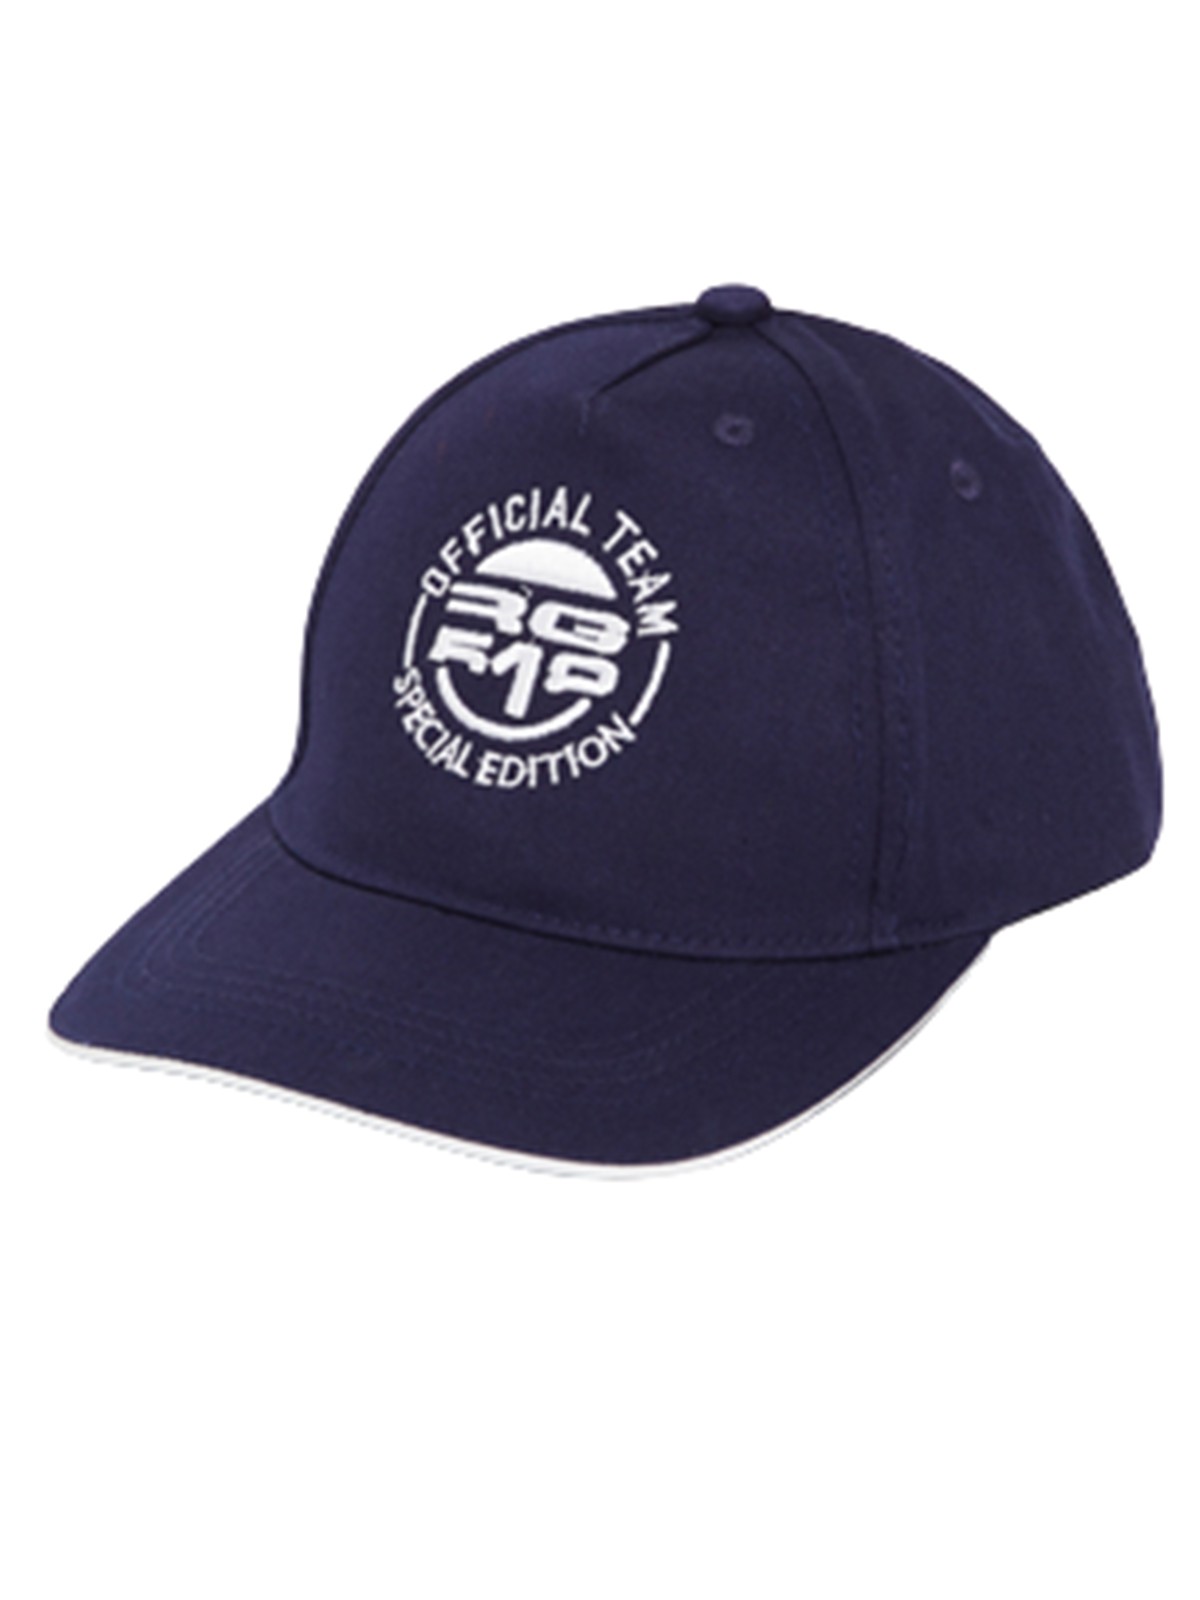 RG512 Cap with visor